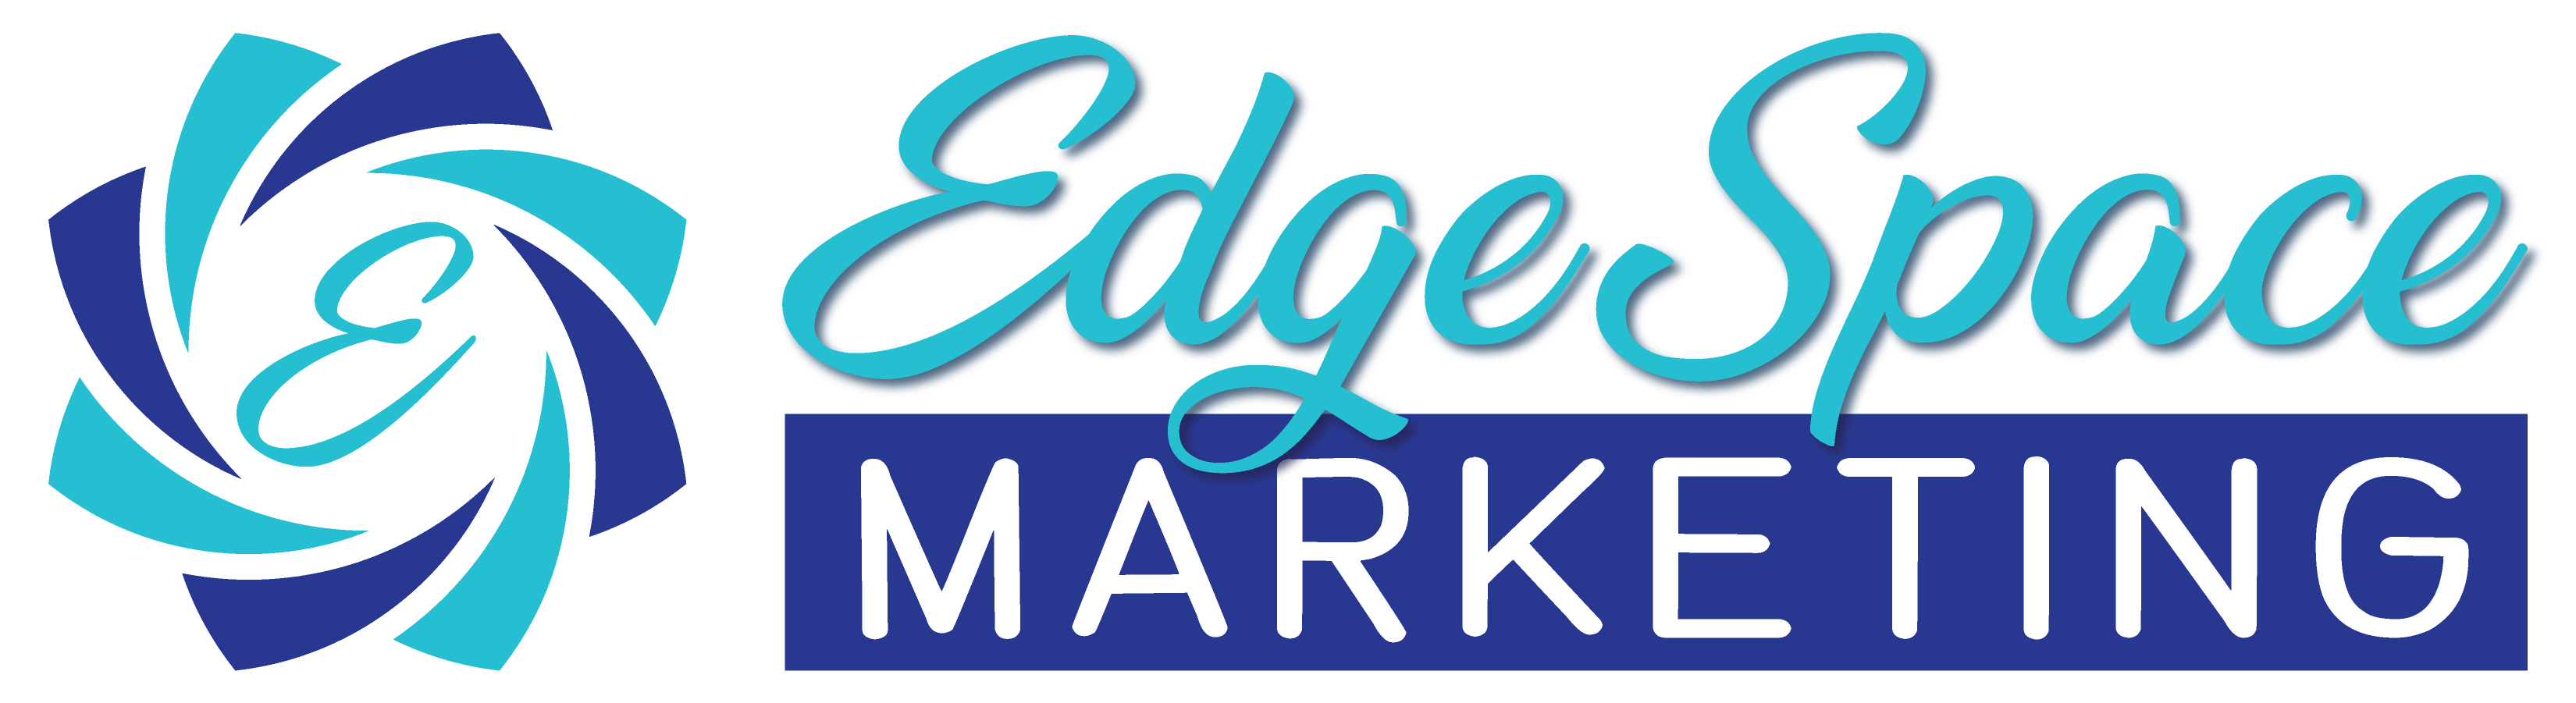 EdgeSpace Marketing